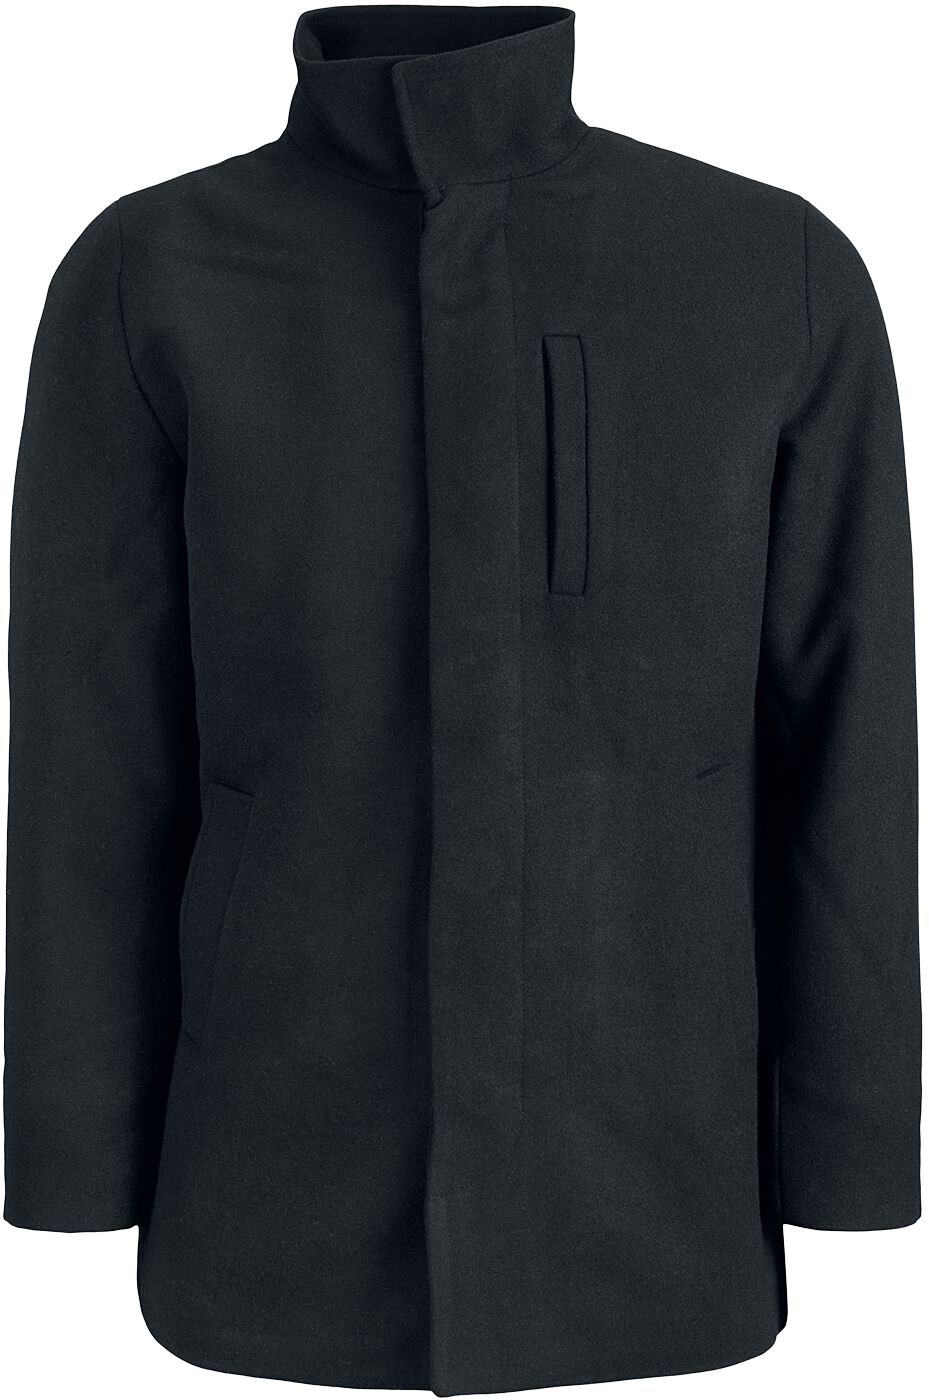 Jack & Jones Dunham Wool Jacket Winterjacke schwarz in XL